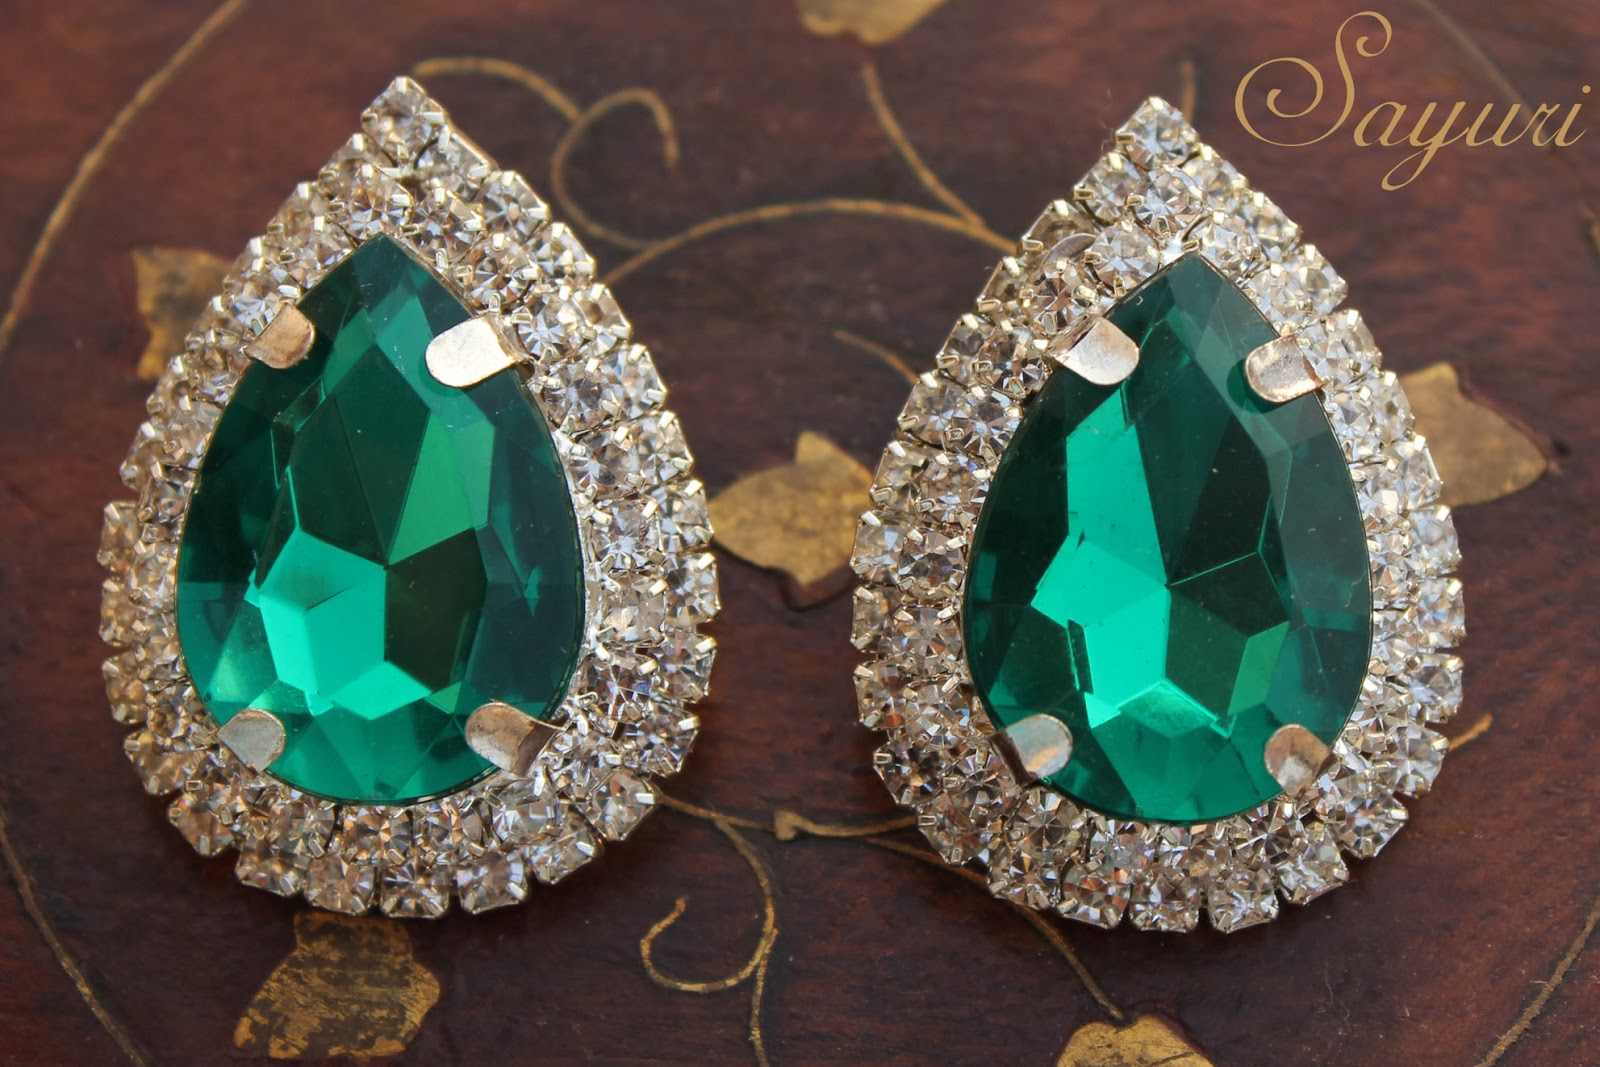 Gemstones in Green - part 1 - Sayuri